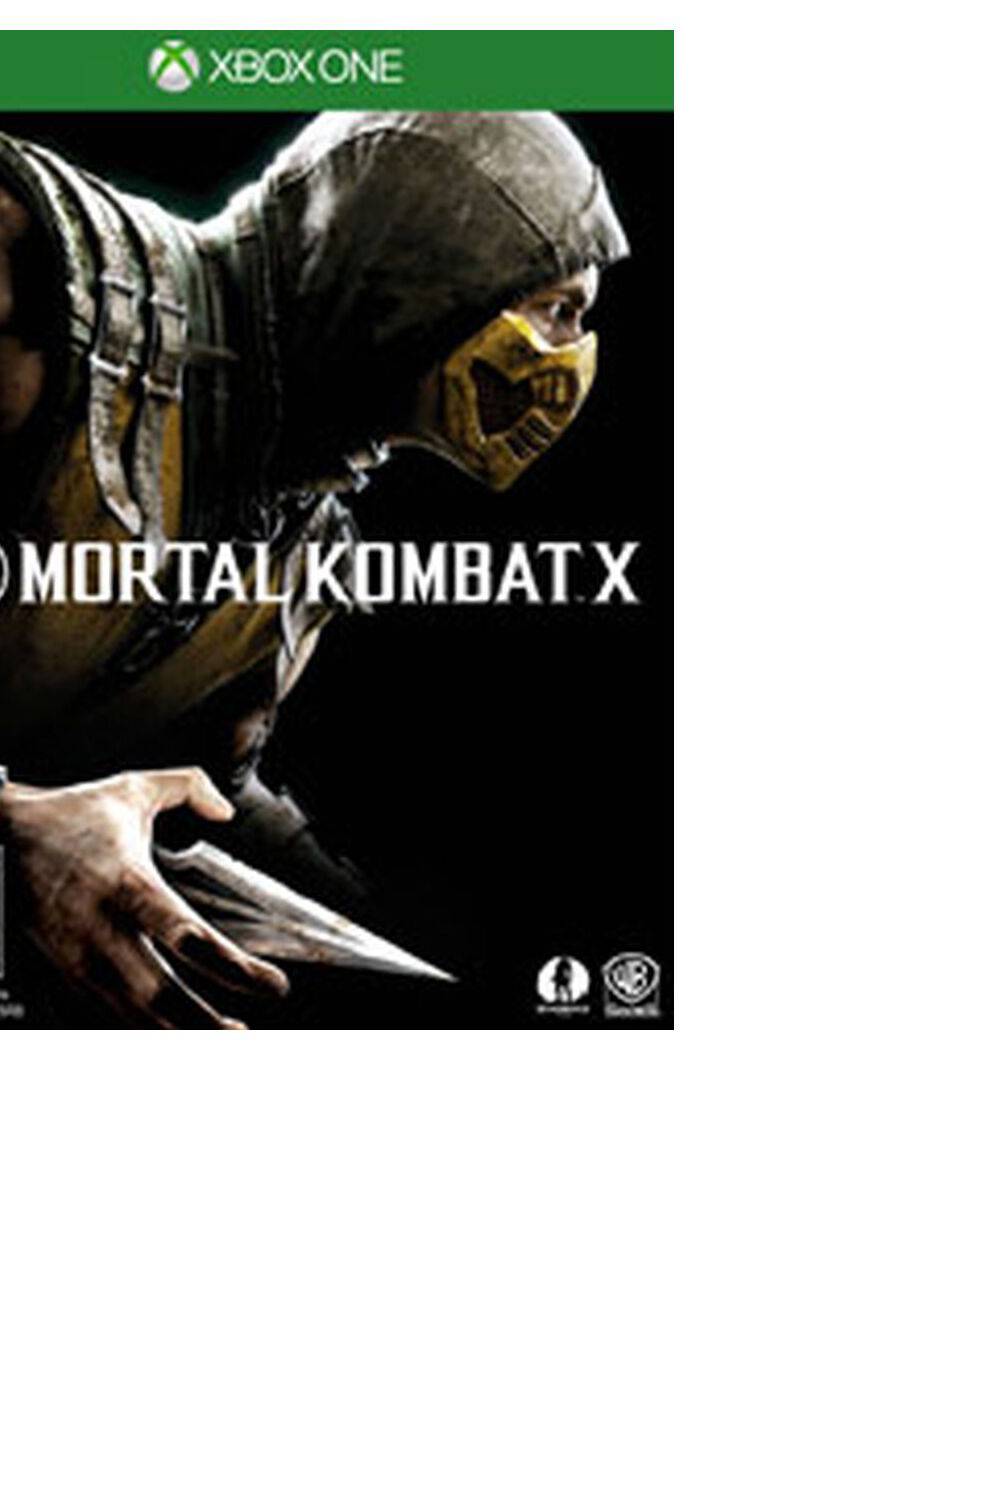 WARNER BROS - Mortal Kombat X Xb1-Us